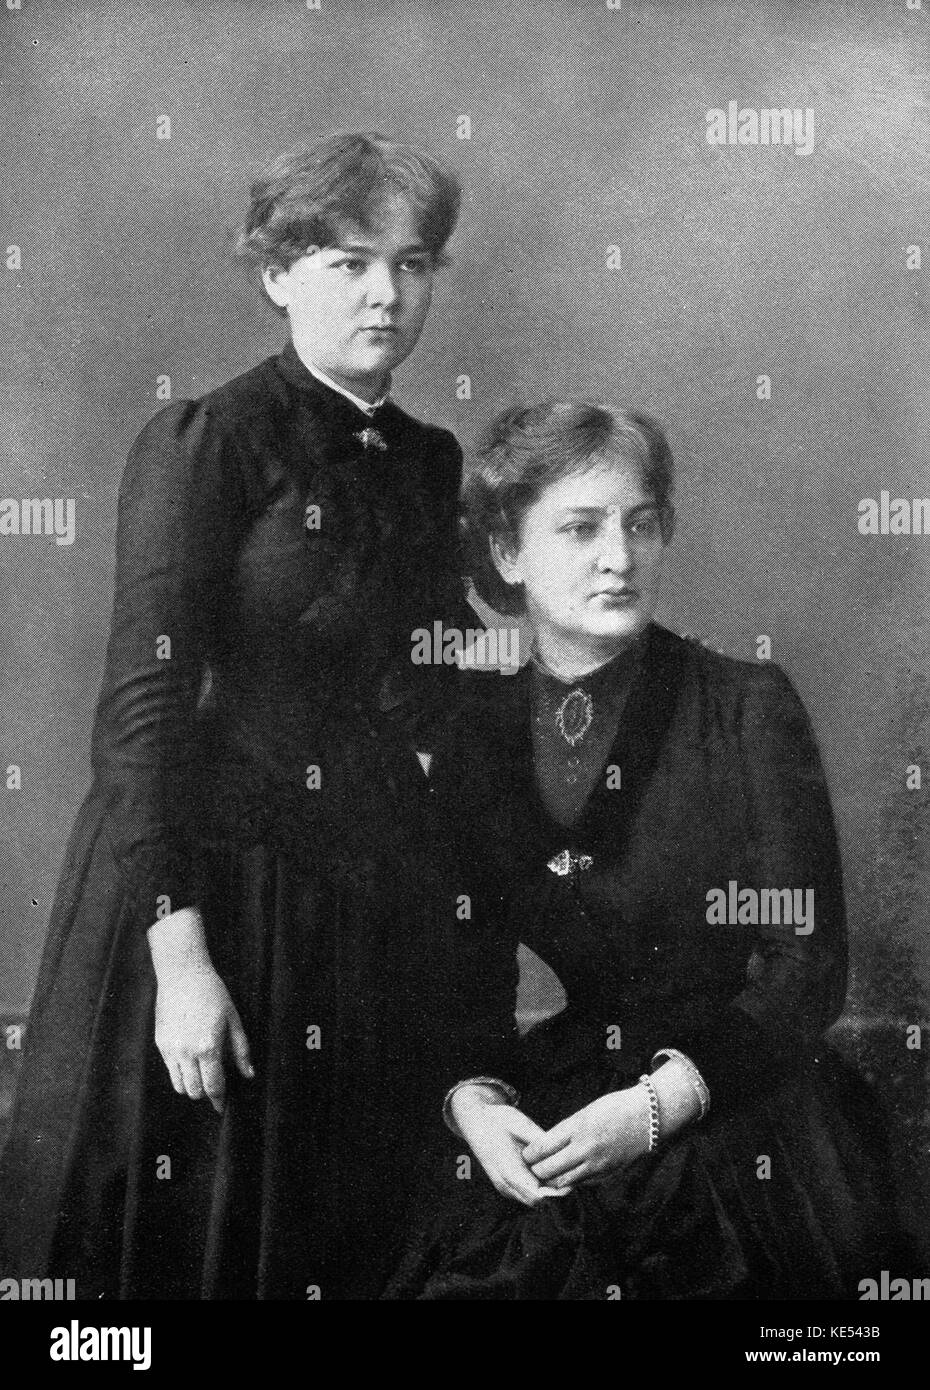 Marie Curie (Manya Sklodovska) with sister Bronya Sklodovska, 1886. MC: Polish-born French physicist and pioneer in radioactivity, 7 November 1867 – 4 July, 1934. Stock Photo